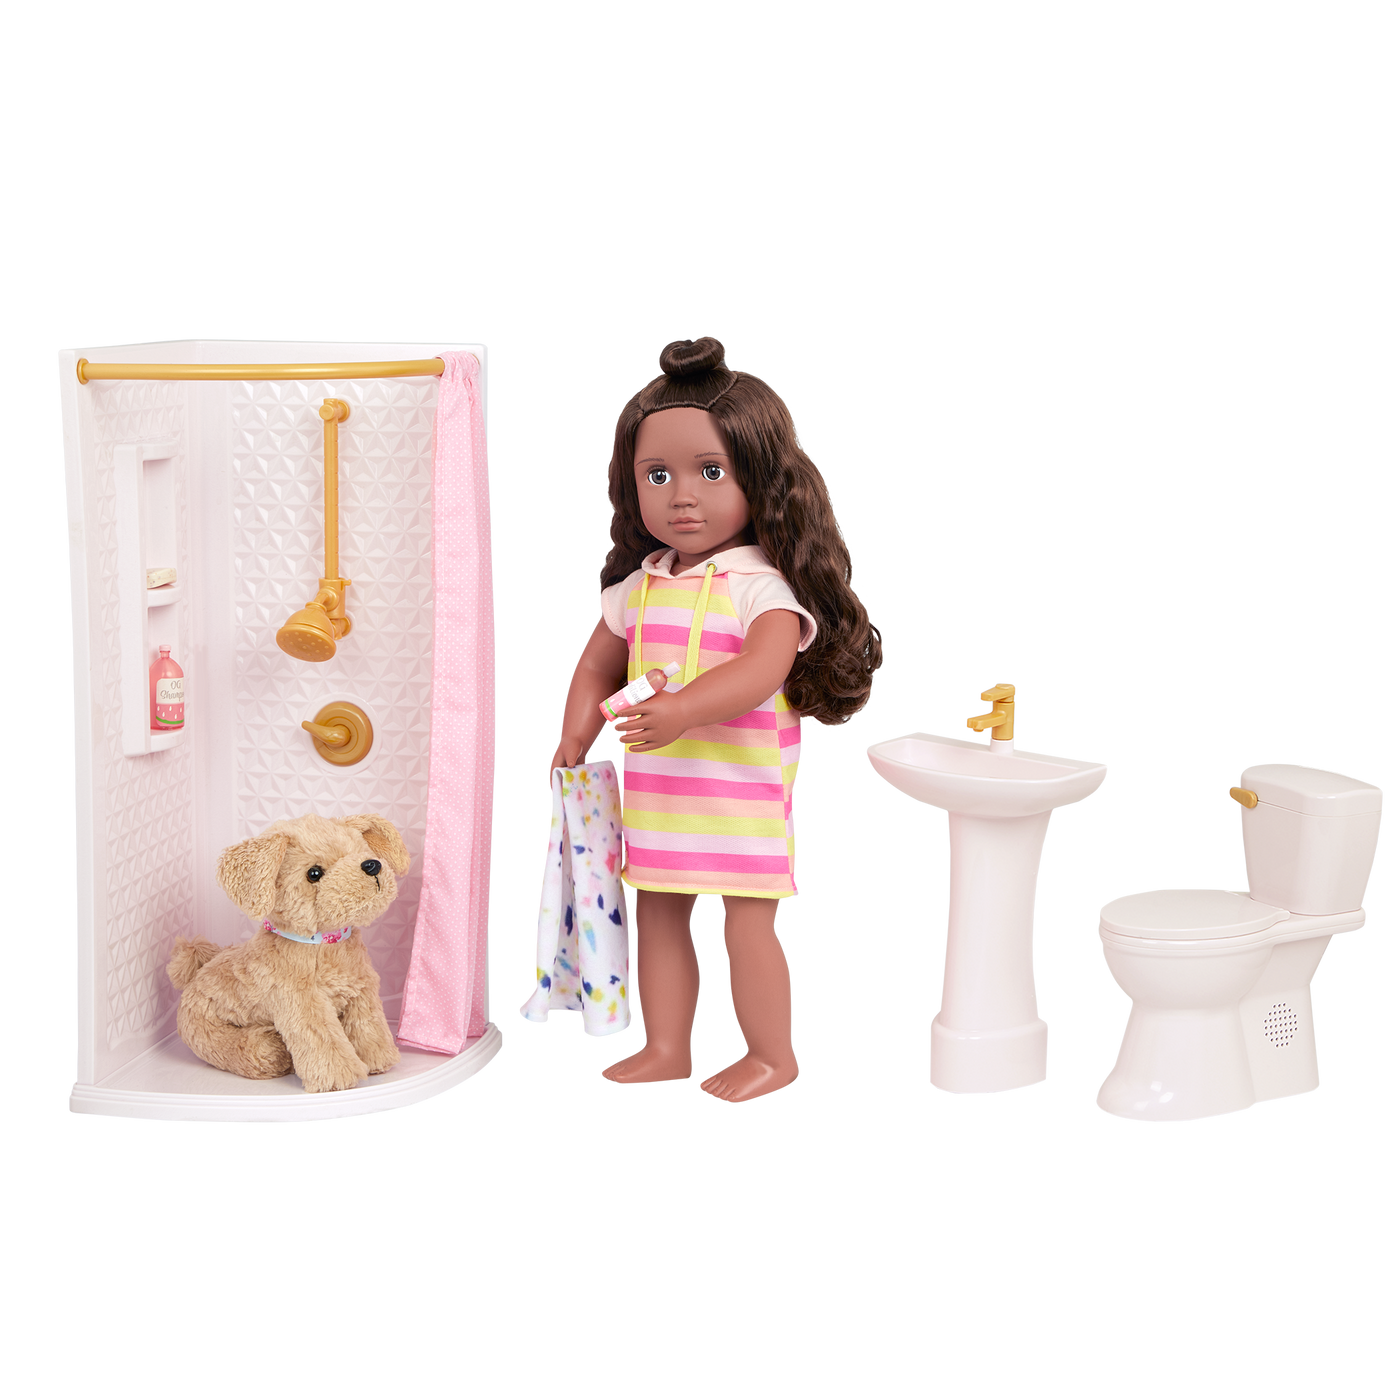 Our Generation Sweet Bathroom Furniture Set for 18-inch Dolls